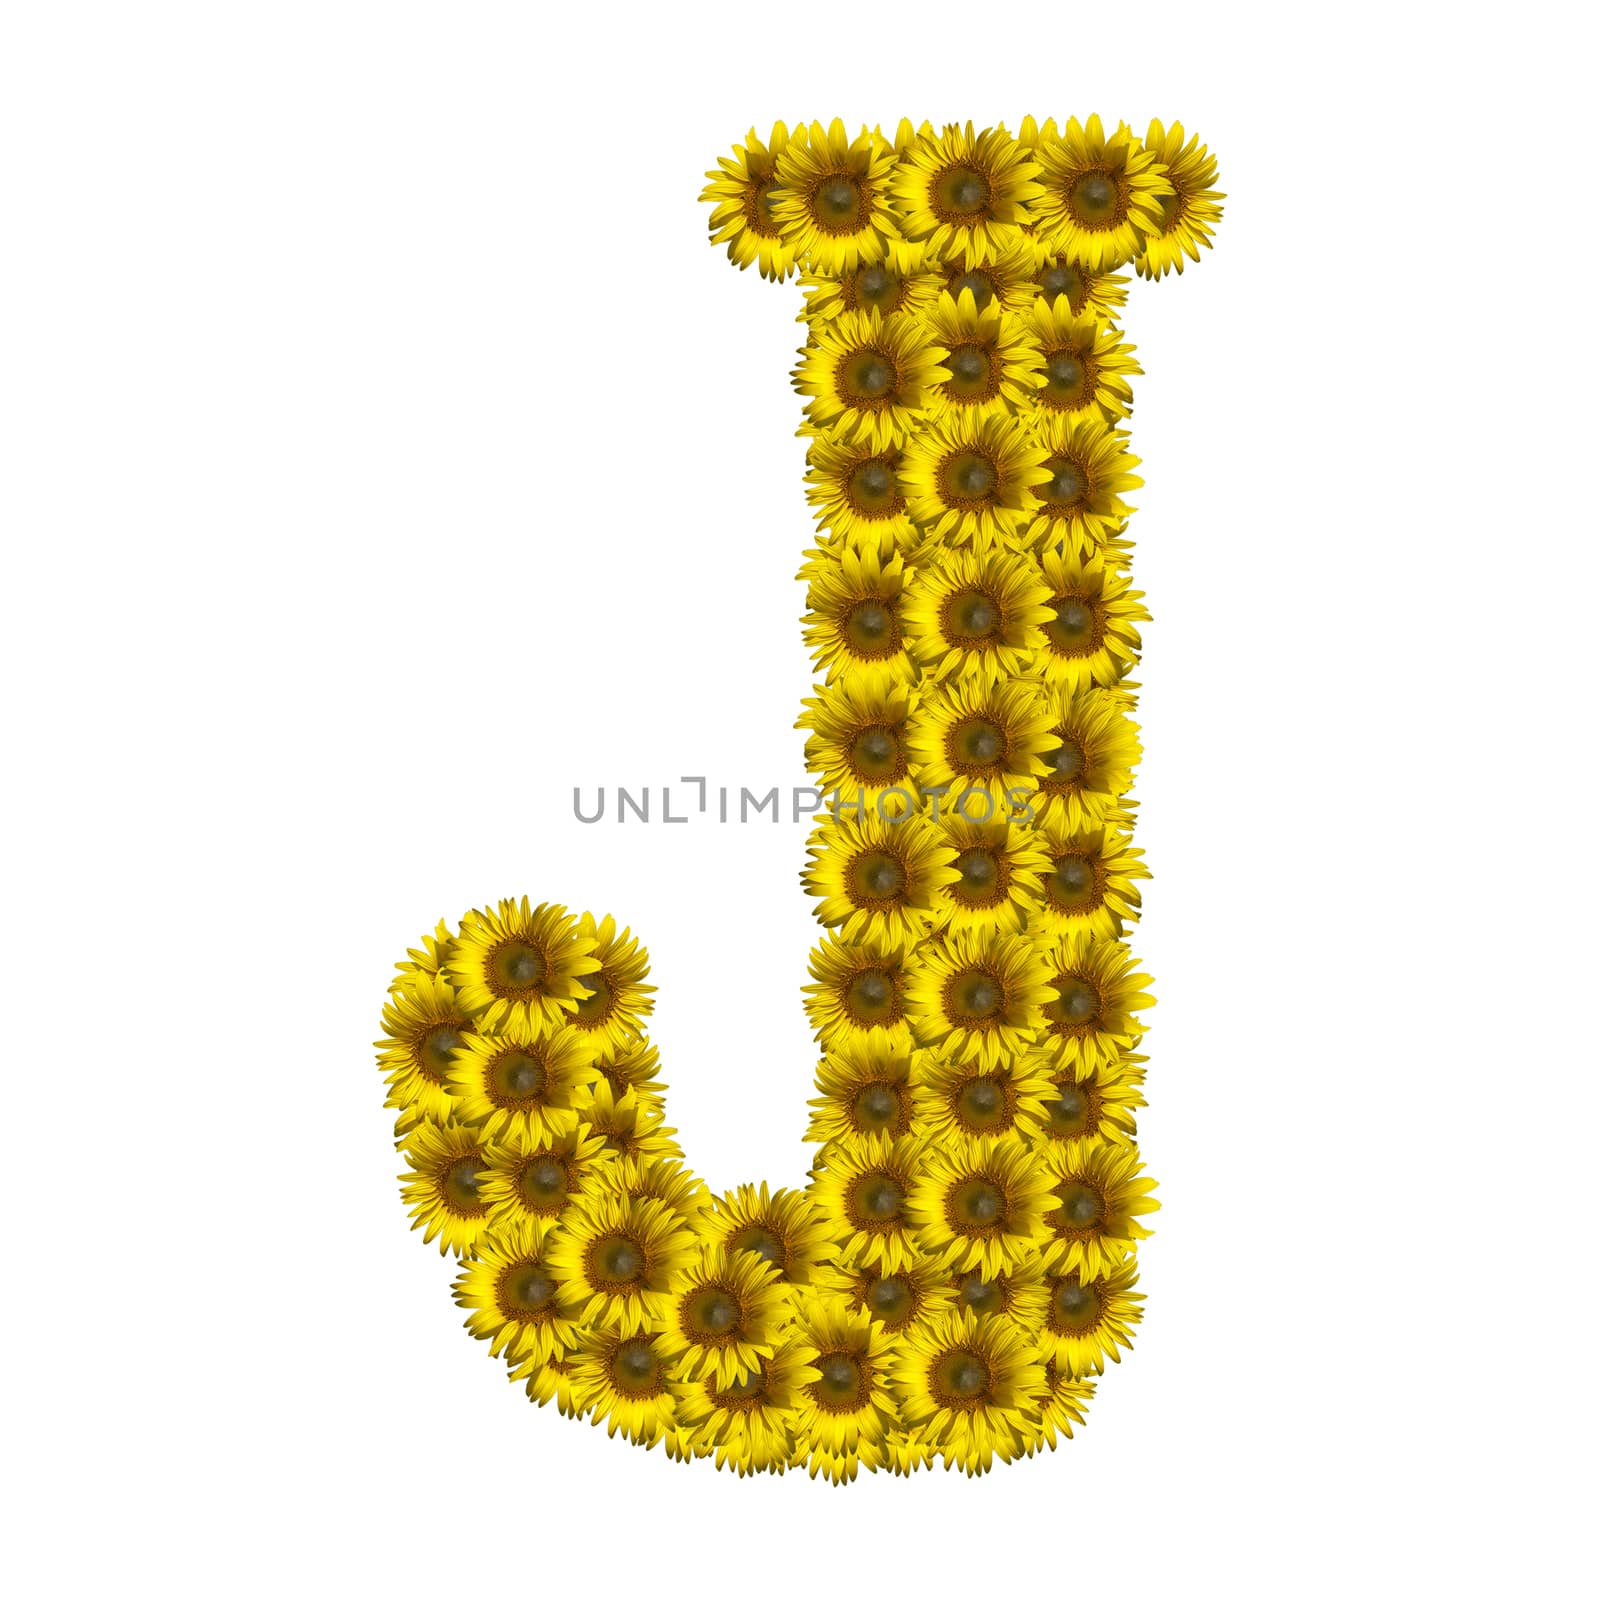 Isolated sunflower alphabet J by Exsodus